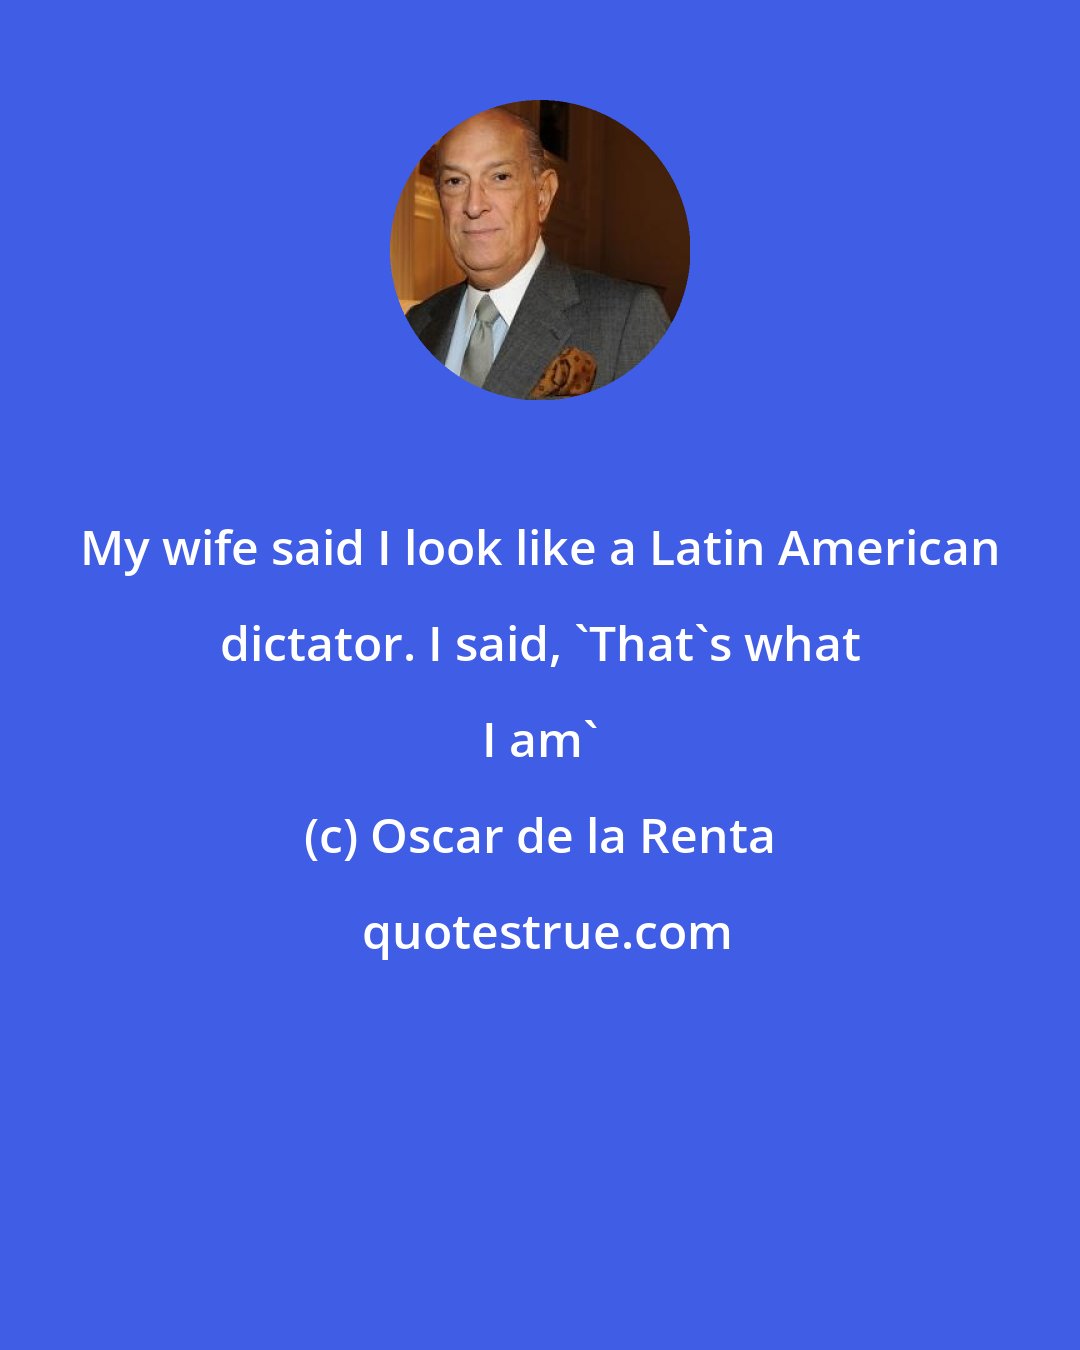 Oscar de la Renta: My wife said I look like a Latin American dictator. I said, 'That's what I am'